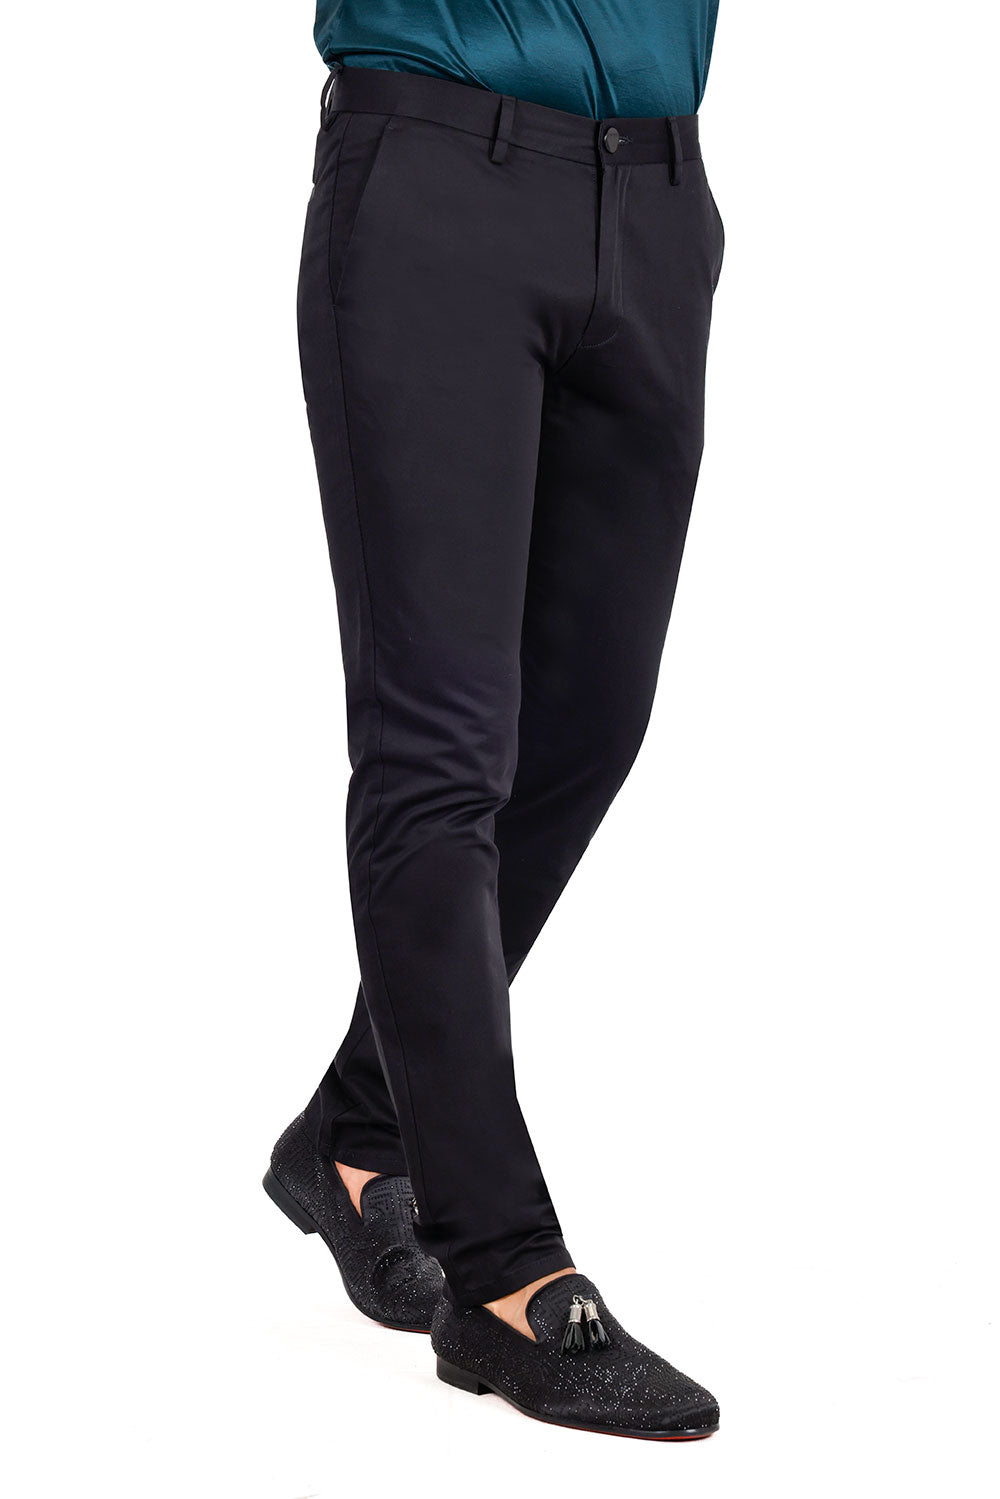 BARABAS Men's Solid Basic Color Casual Dress Pants B2062 Black